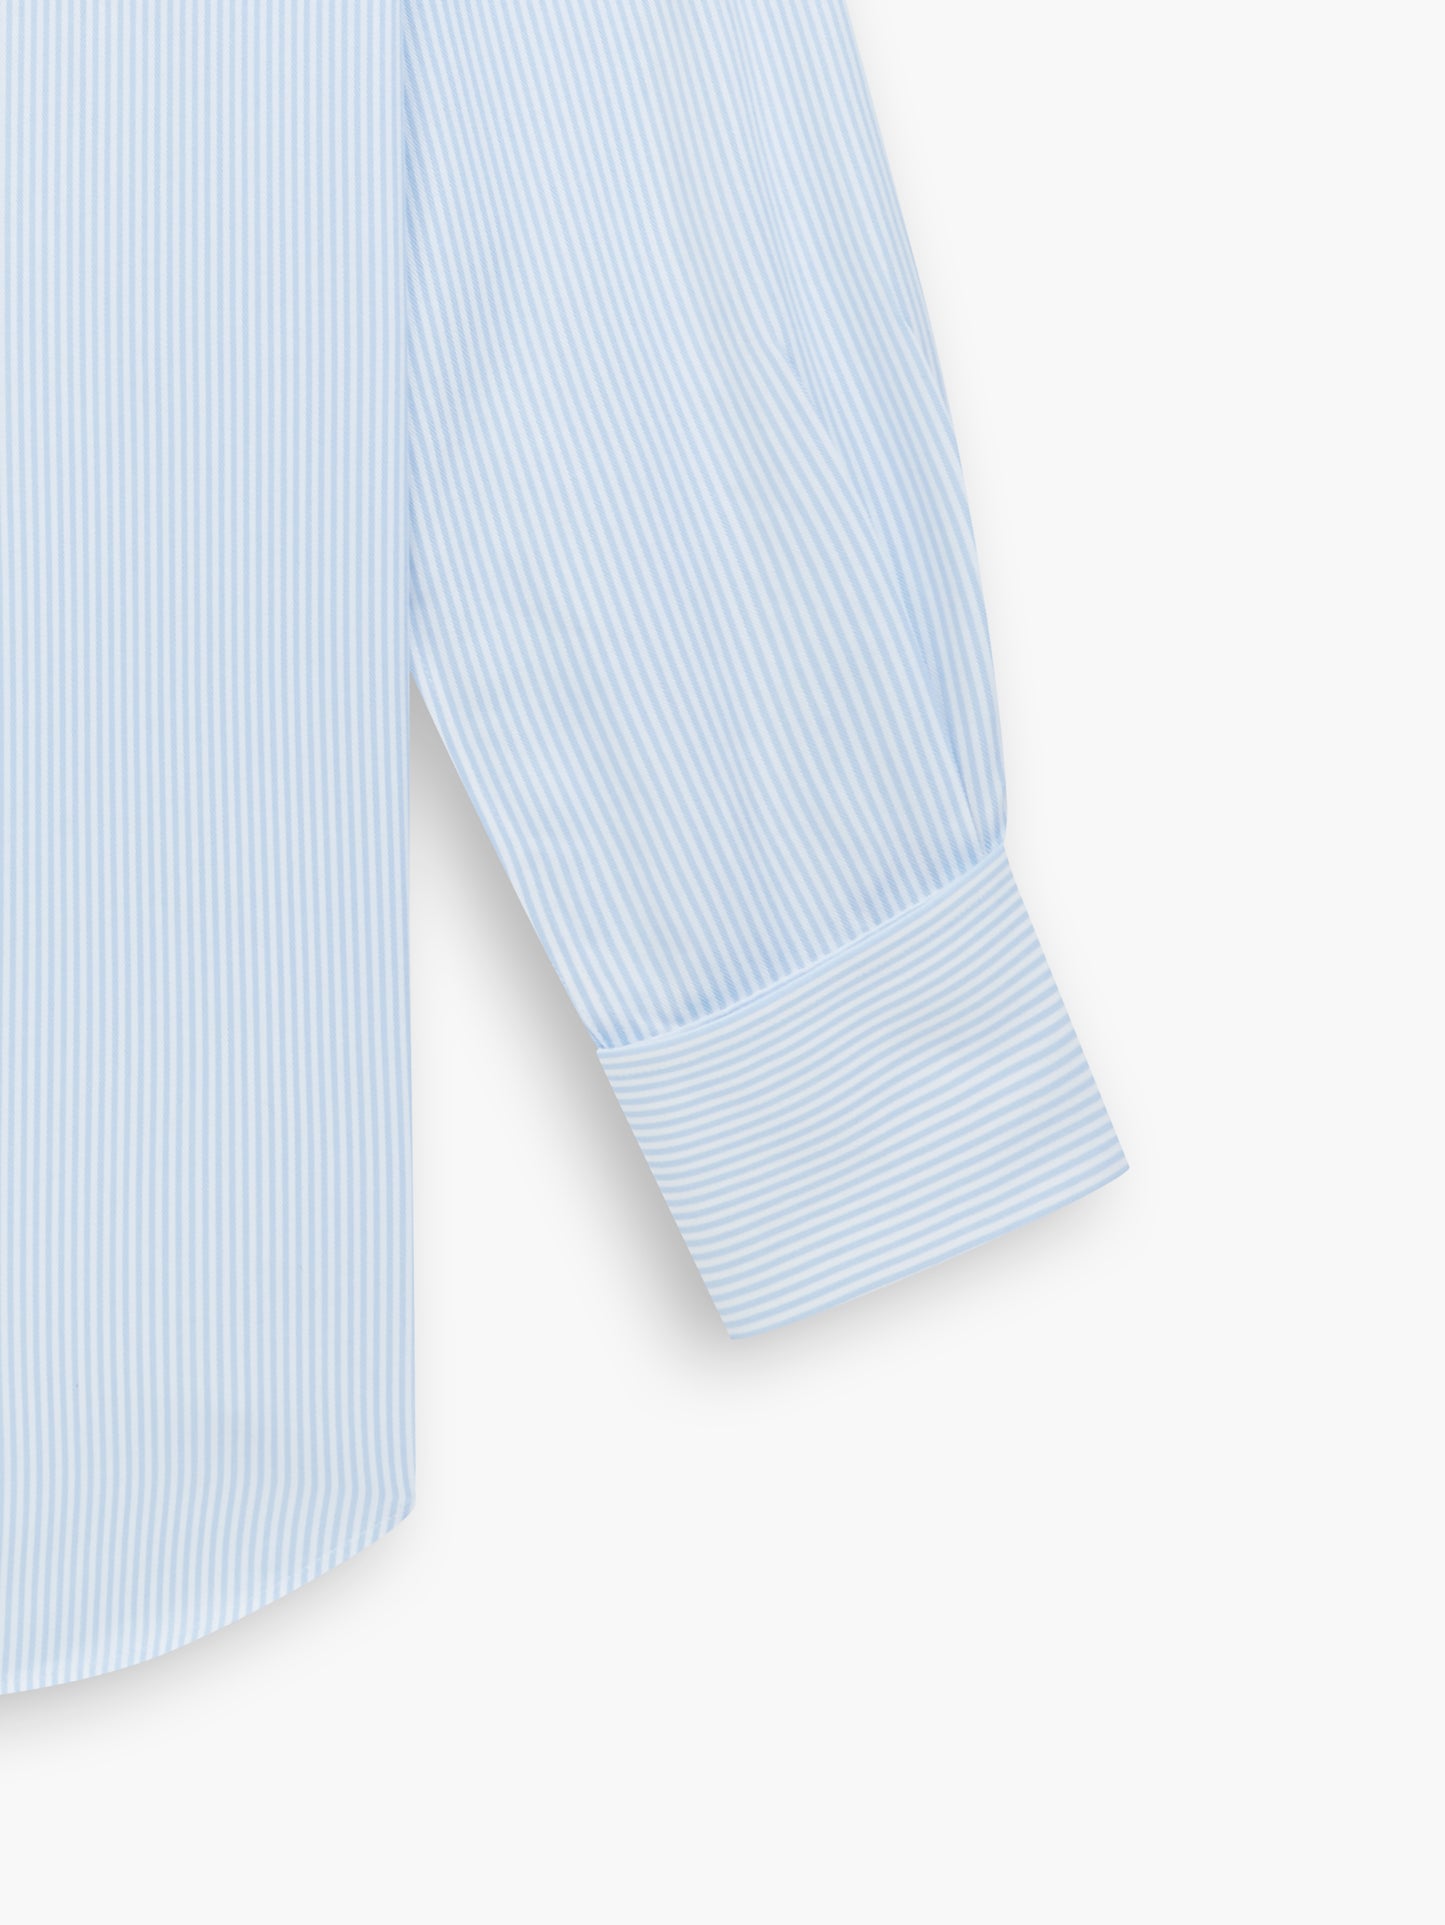 Non-Iron Light Blue Bengal Stripe Twill Fitted Double Cuff Semi Cutaway Collar Shirt